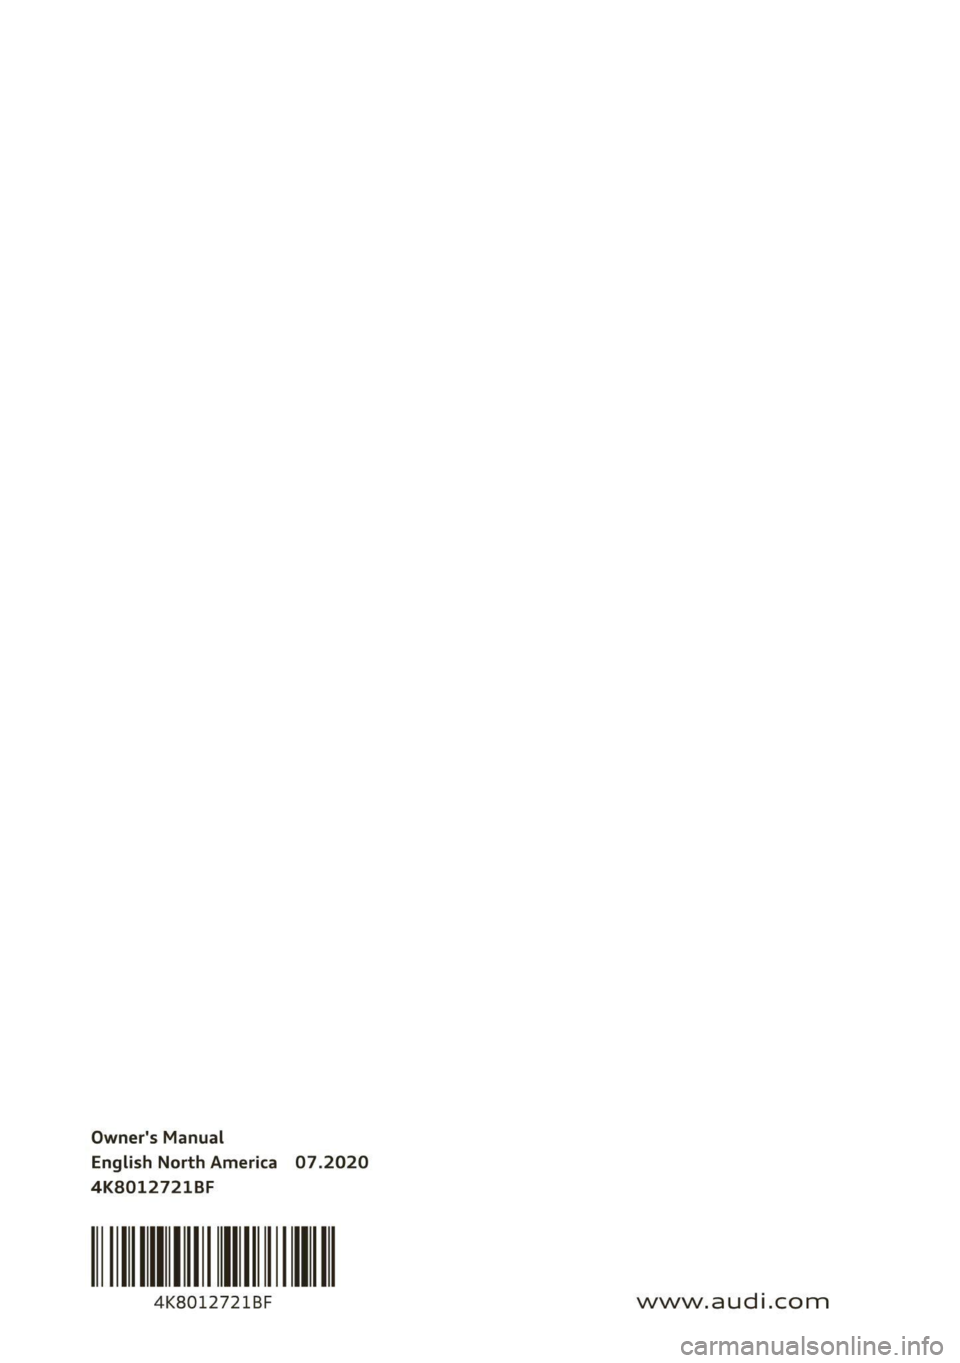 AUDI A7 2021  Owner´s Manual Owner's Manual 
English North America 07.2020 
4K8012721BF 
4K8012721BF 
                                  
www.audi.com  